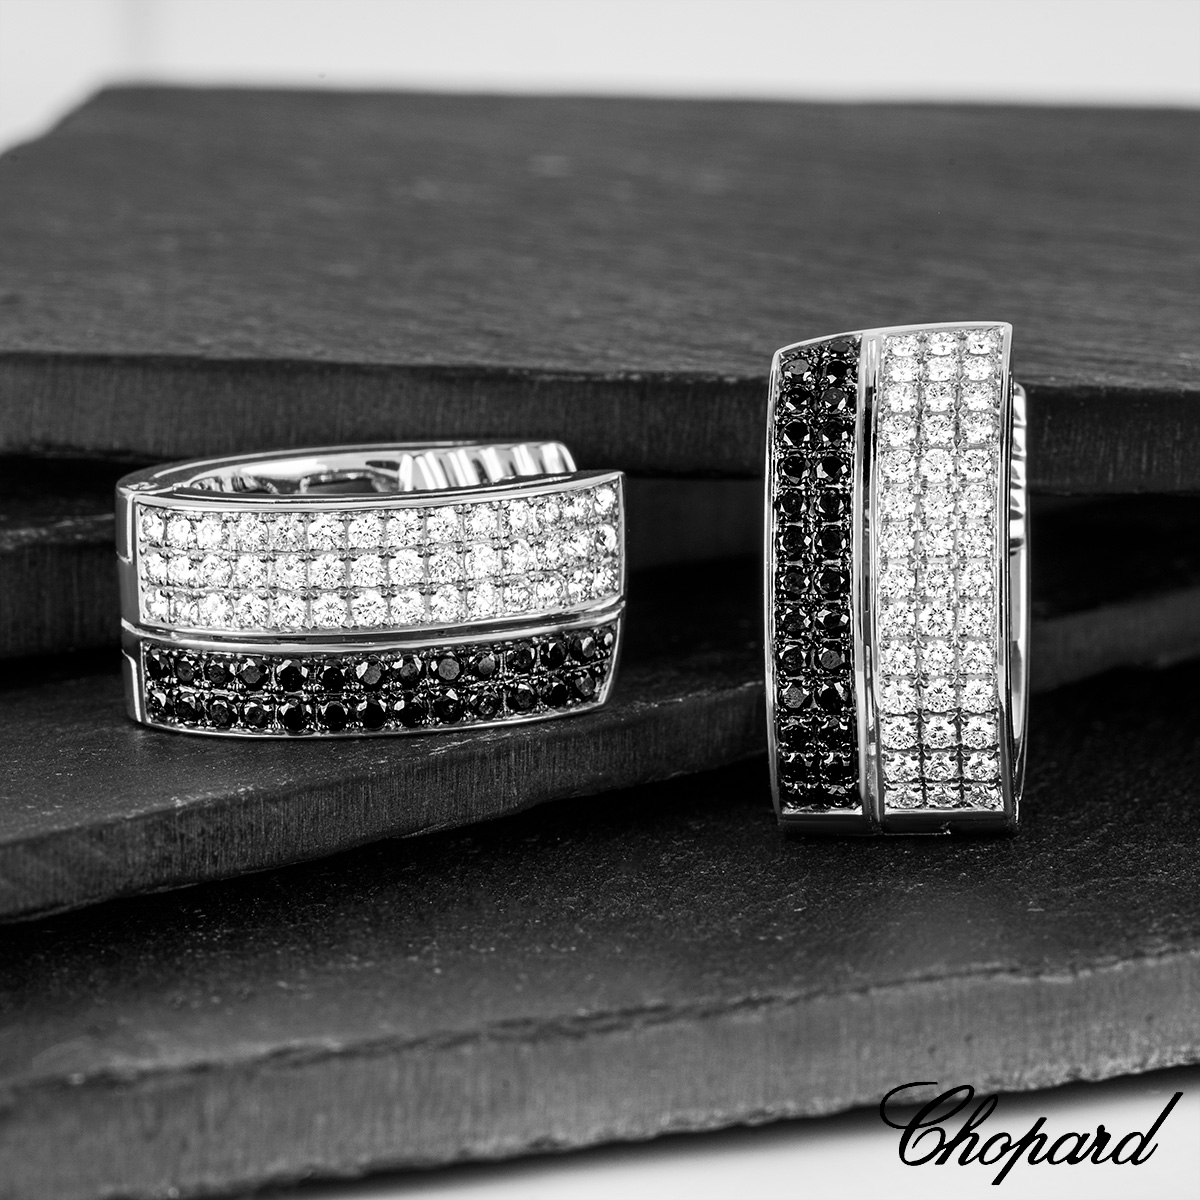 Chopard White Gold Diamond Set Hoop Earrings 844073-1001